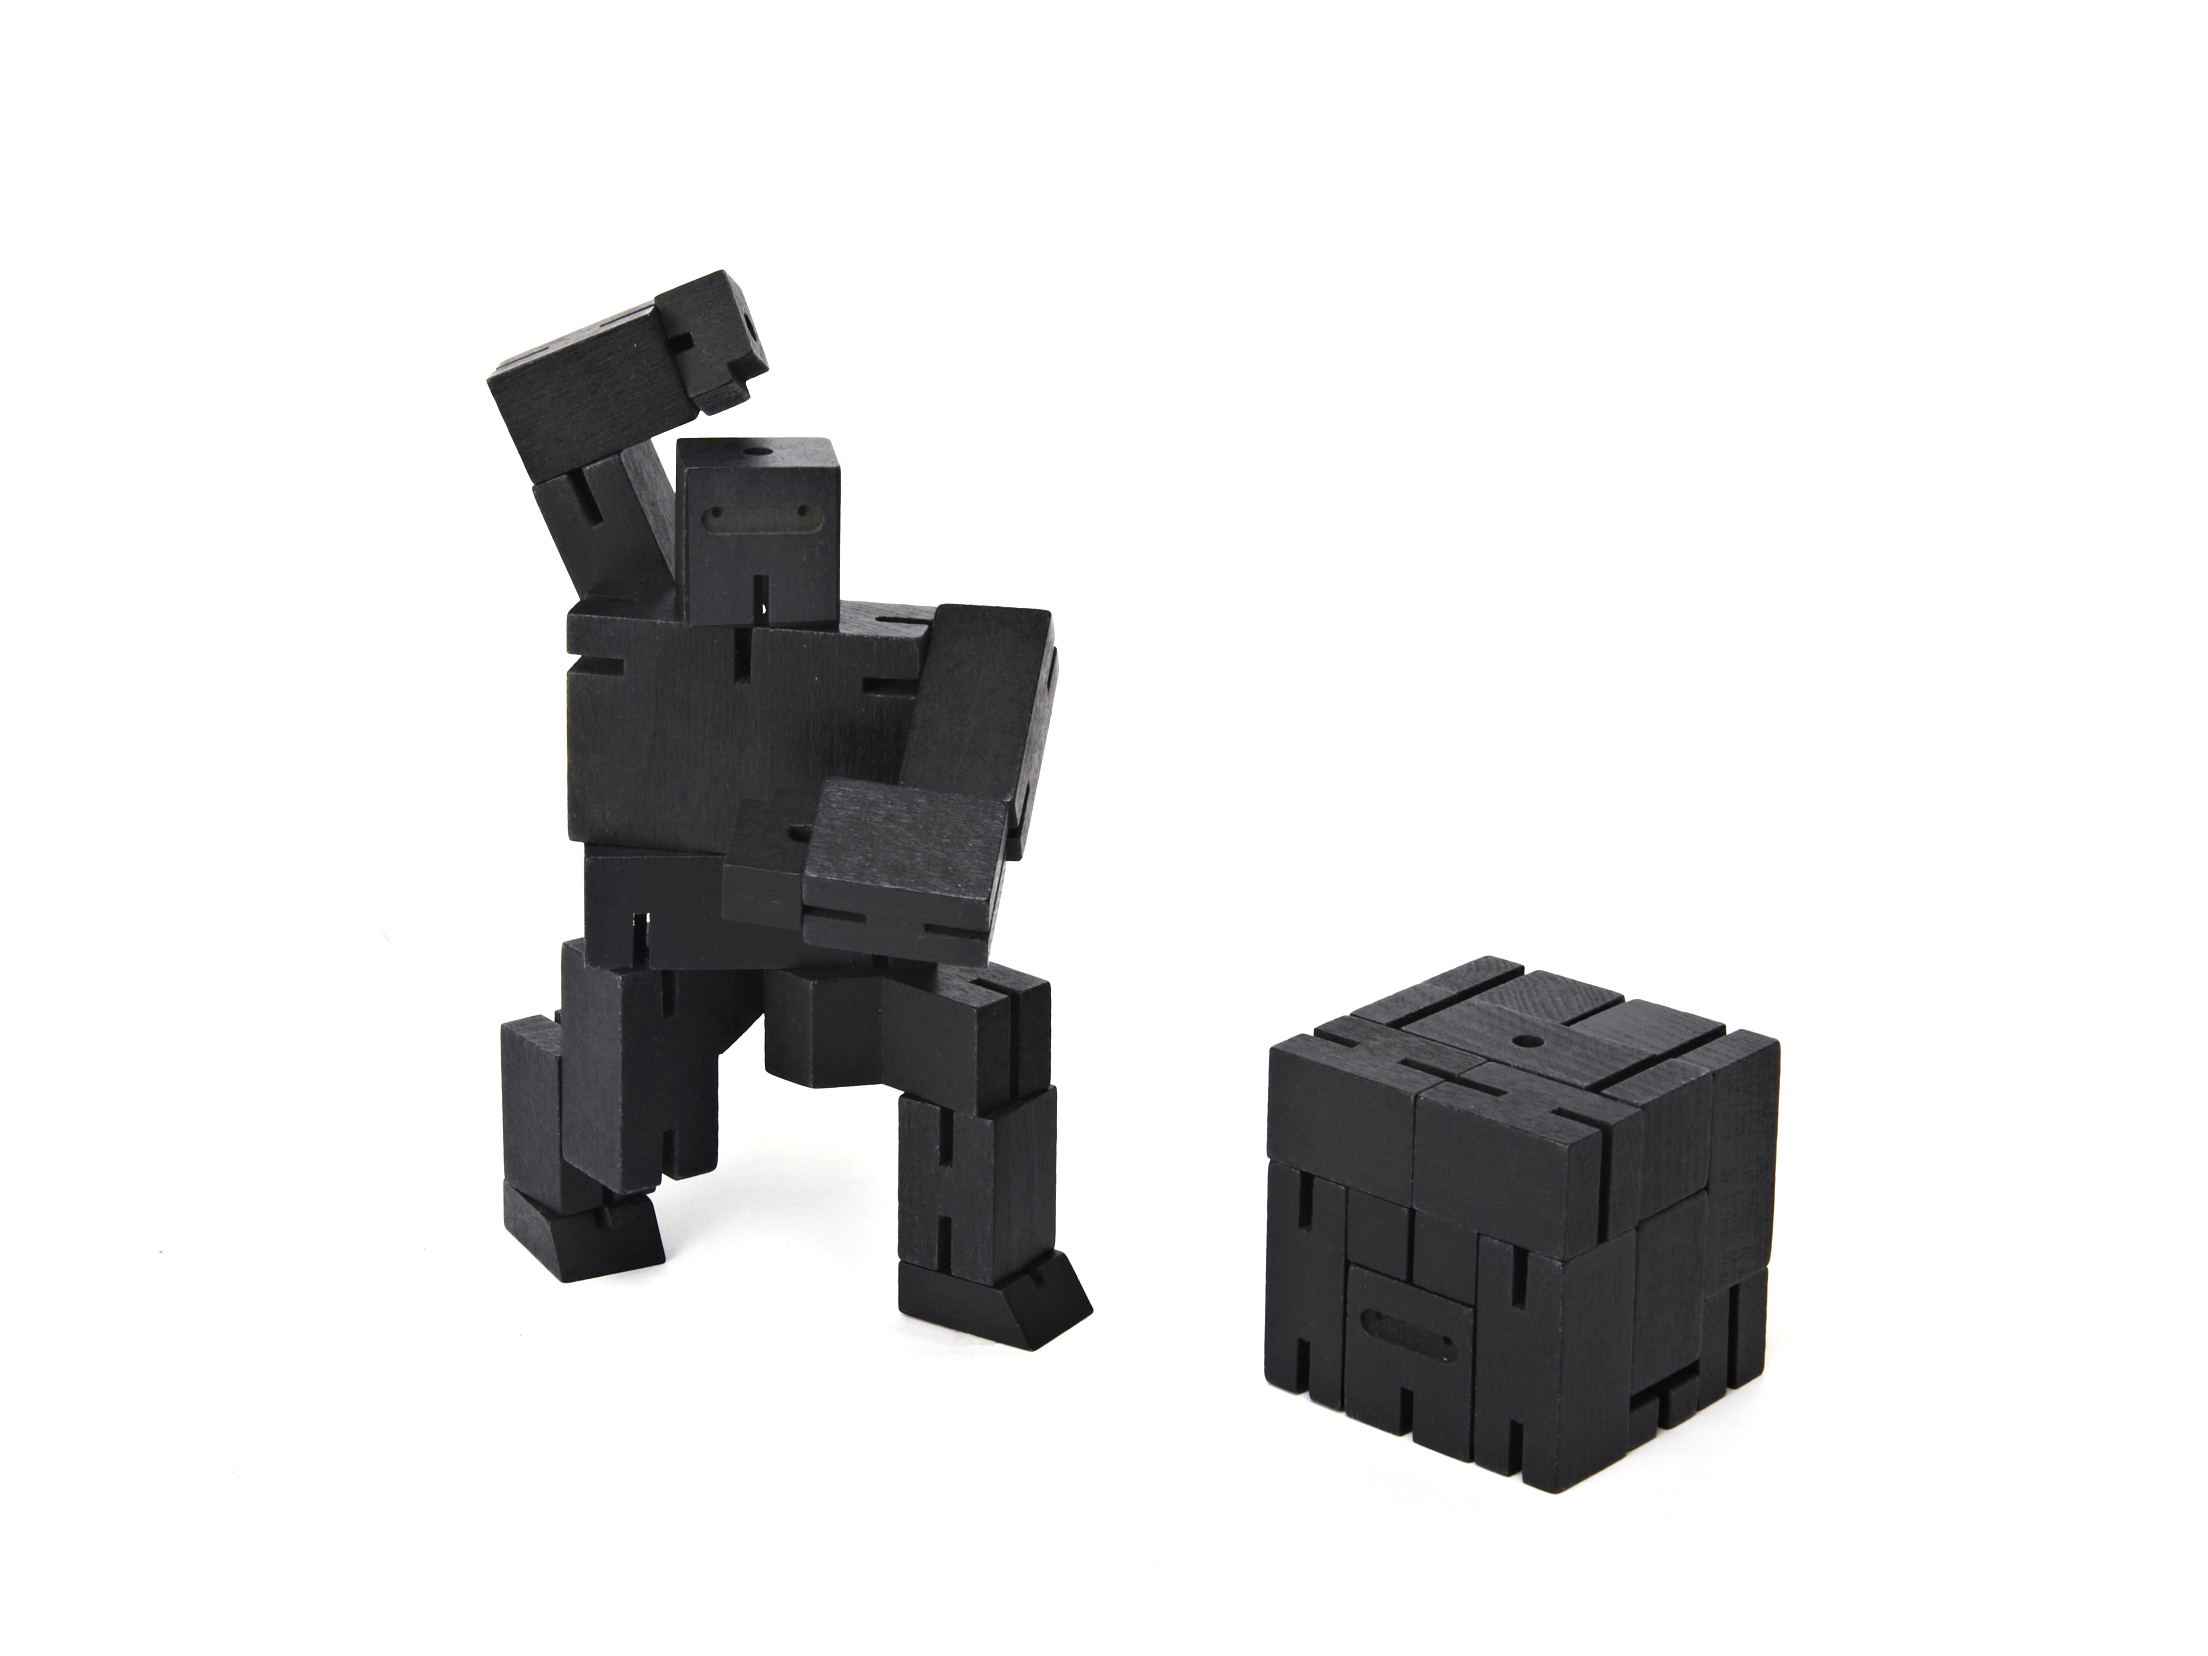 Ninjabot Cubebot - Designed by David Weeks